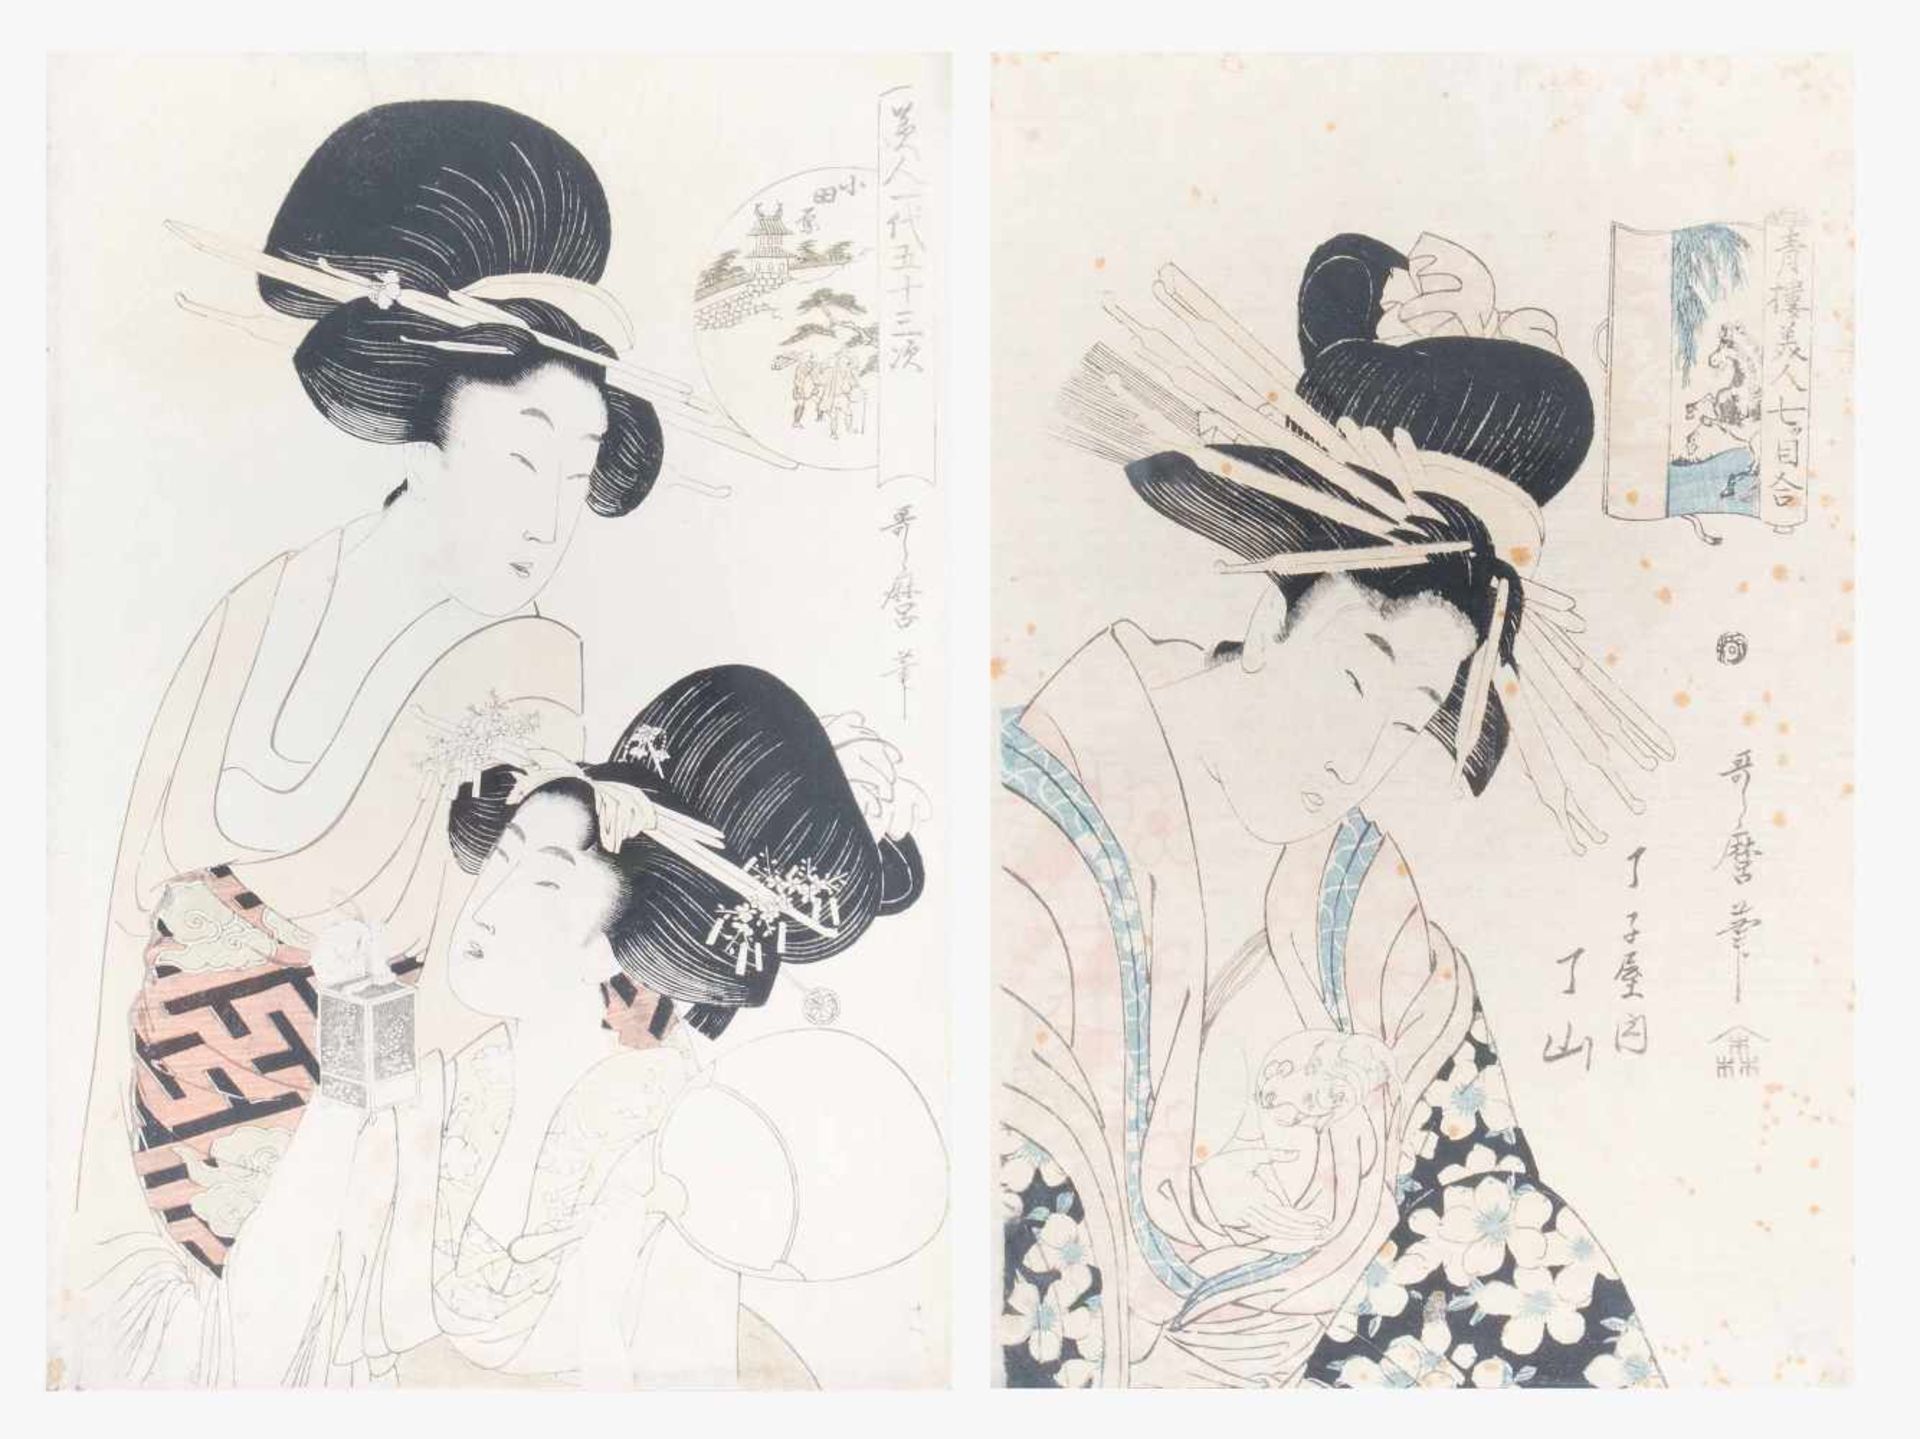 Lot 2 Blätter von Utamaro (1753–1806)Seirô Bijin nanatsume awase, Chôjiya Chôzan. Kurtisane mit